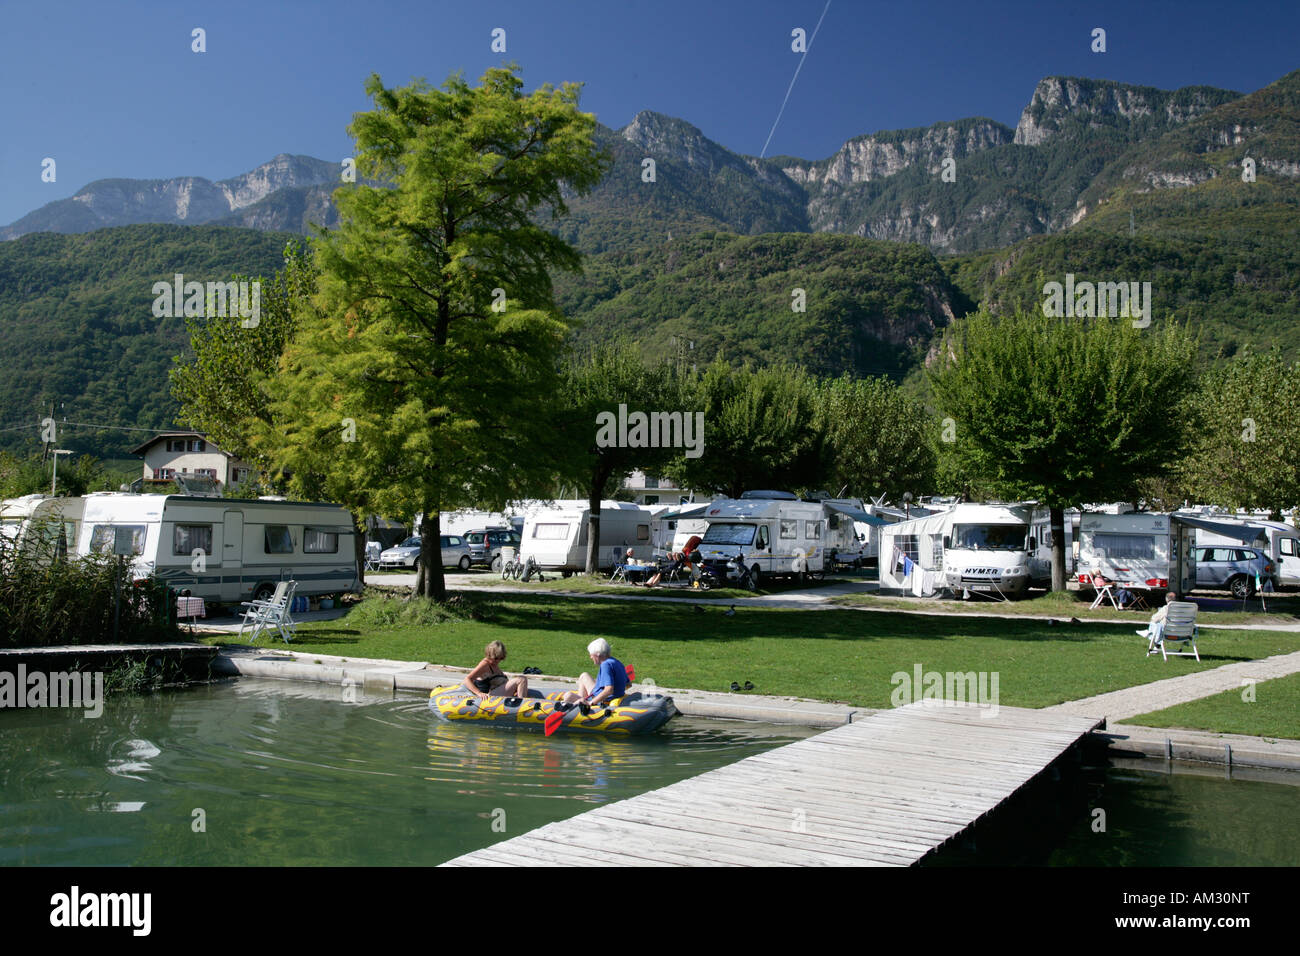 Ältere paar in einem Schlauchboot, Campingplatz am Kalterer See, Südtirol,  Italien Stockfotografie - Alamy